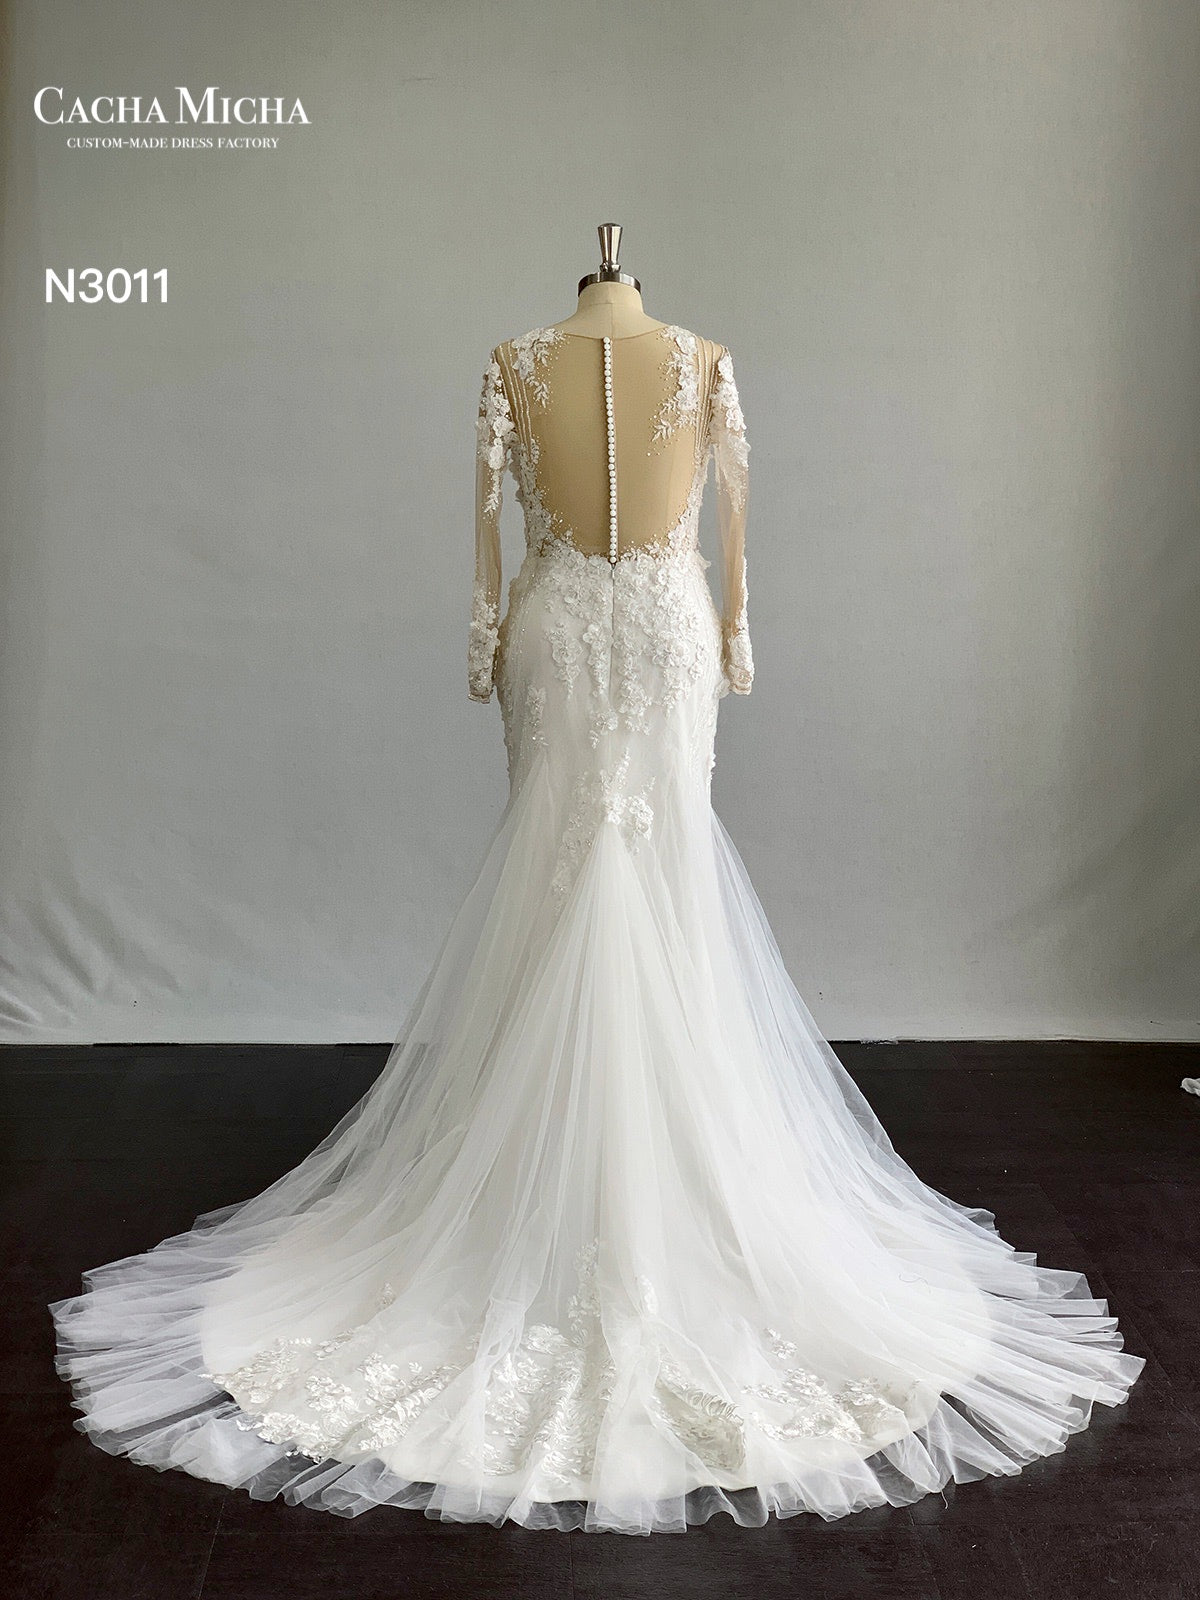 Heavy Beaded 3D Lace Long Sleeves 2 In 1 Wedding Dress N3011